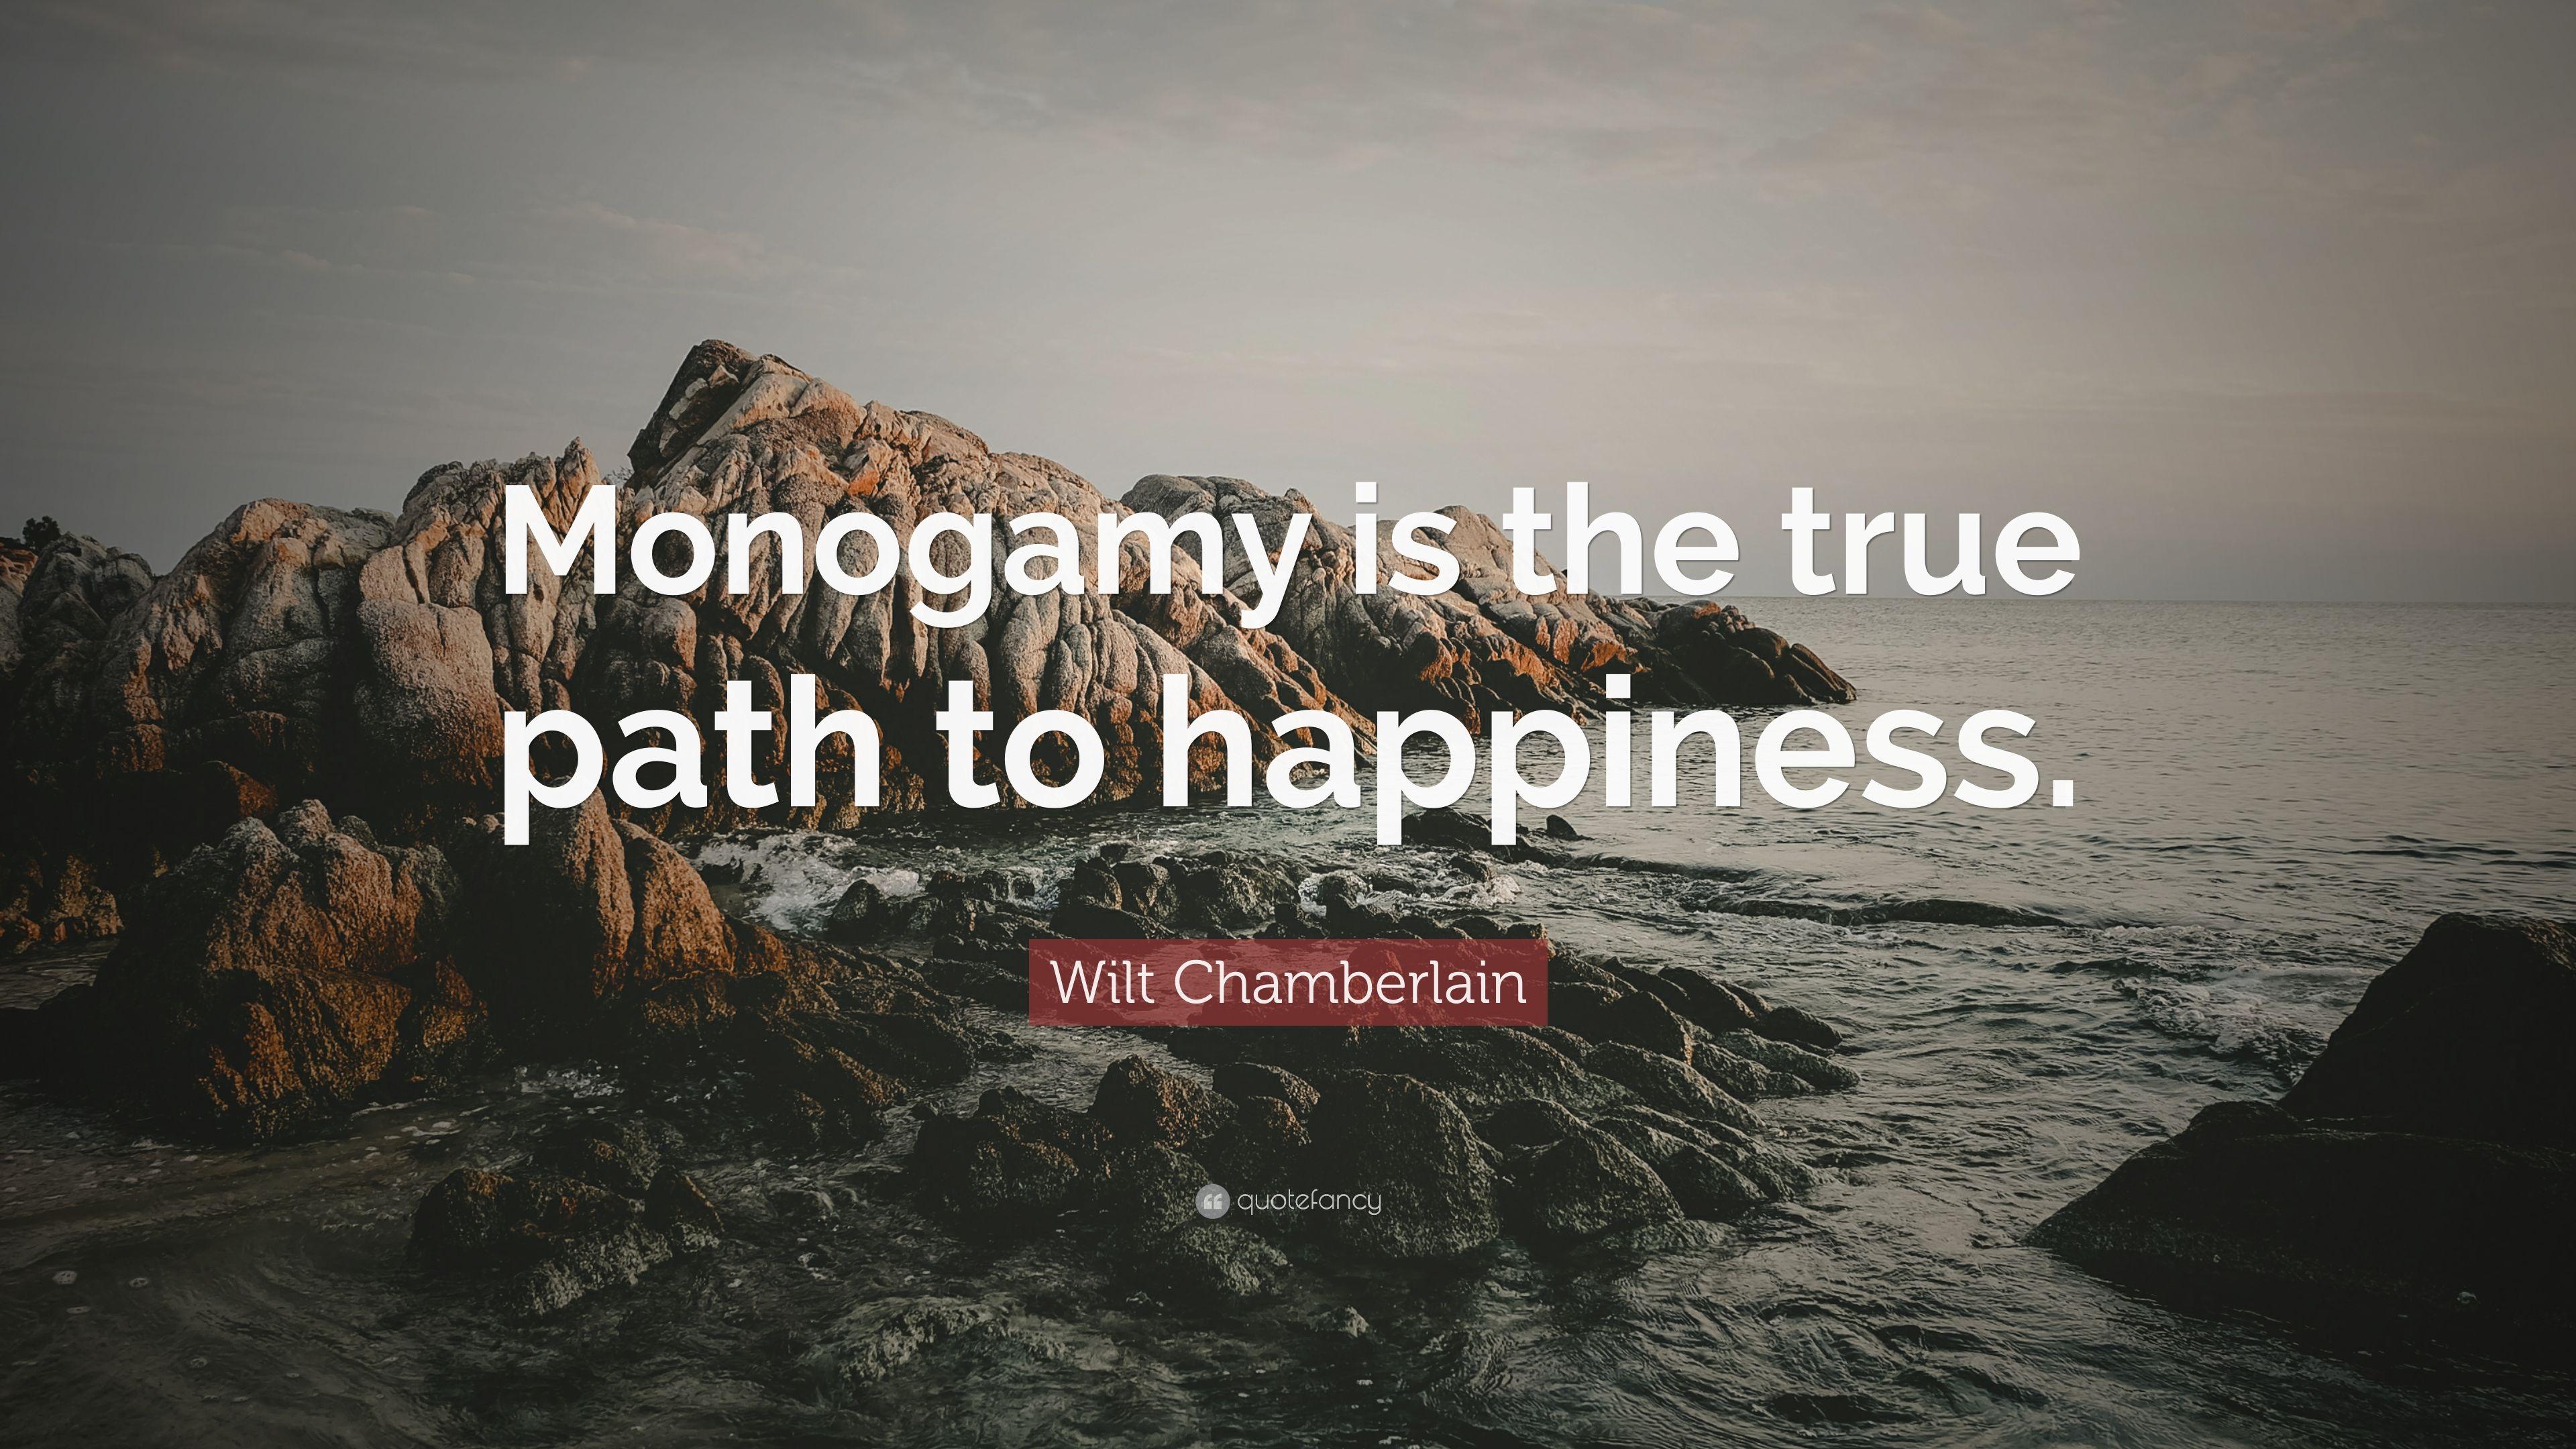 Wilt Chamberlain Quote: “Monogamy is the true path to happiness.” 7